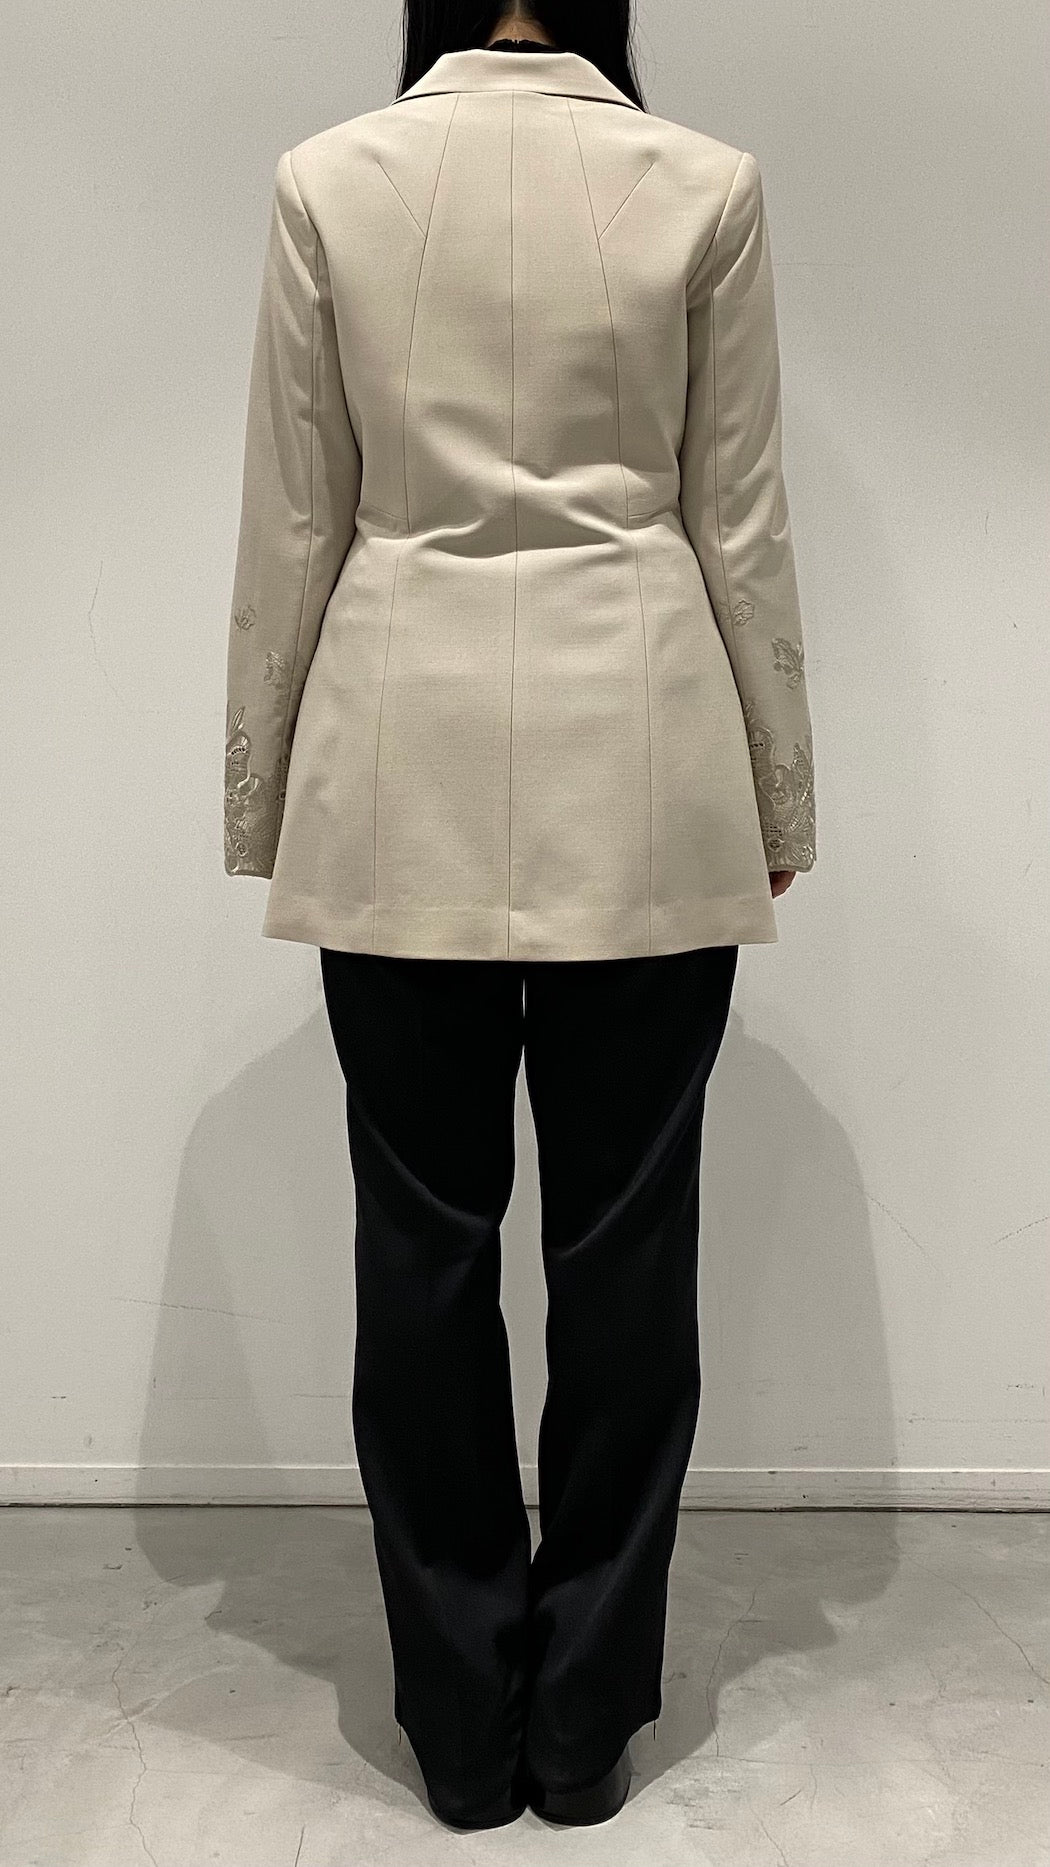 MURRAL Morpho embroidery jacket (Ivory)